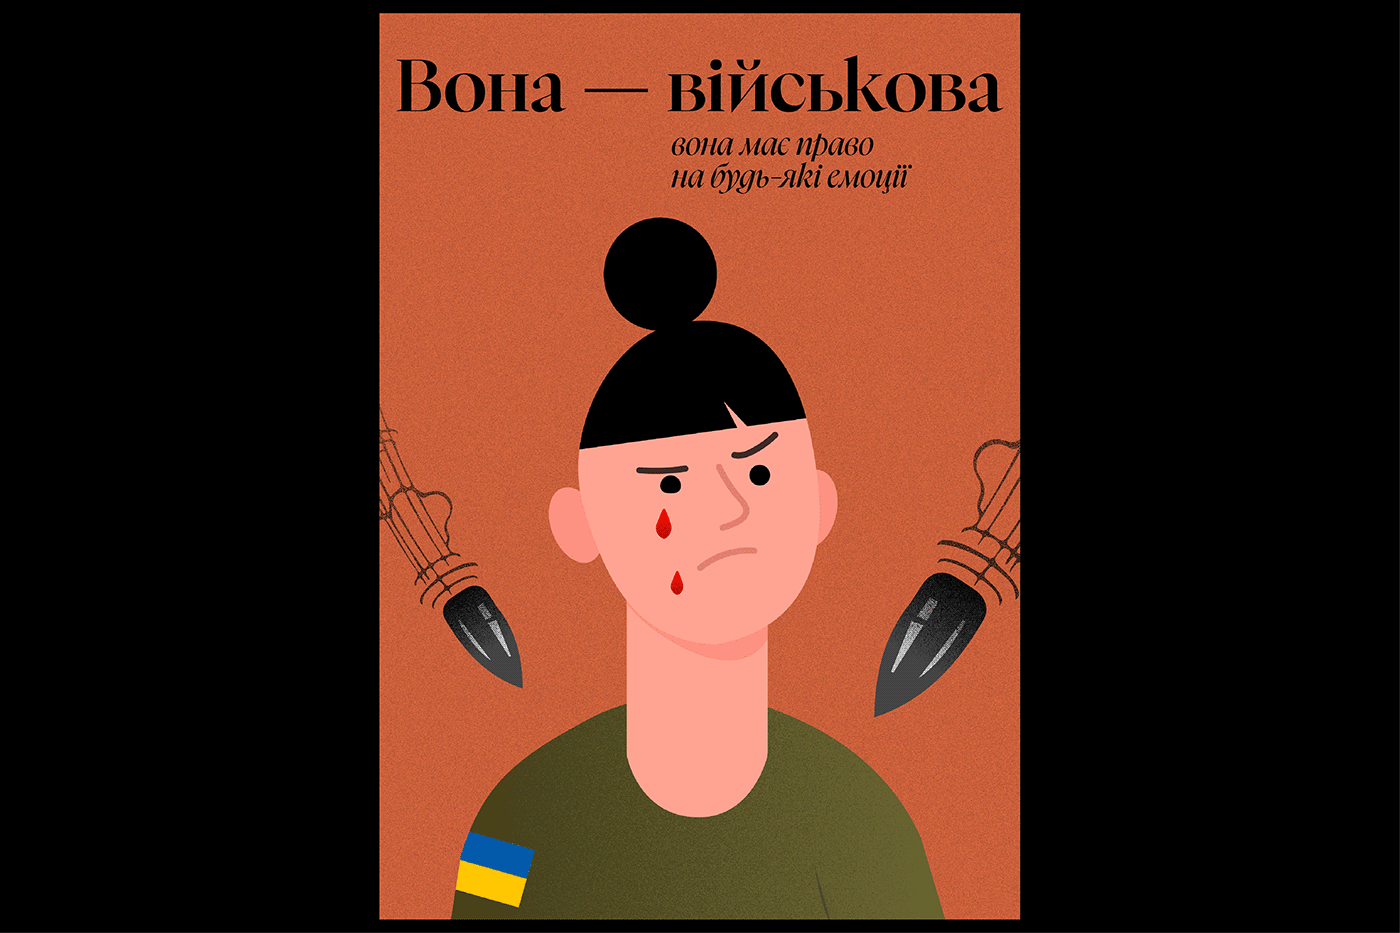 ILLUSTRATION  flat illustration graphic design  ukraine Kyiv